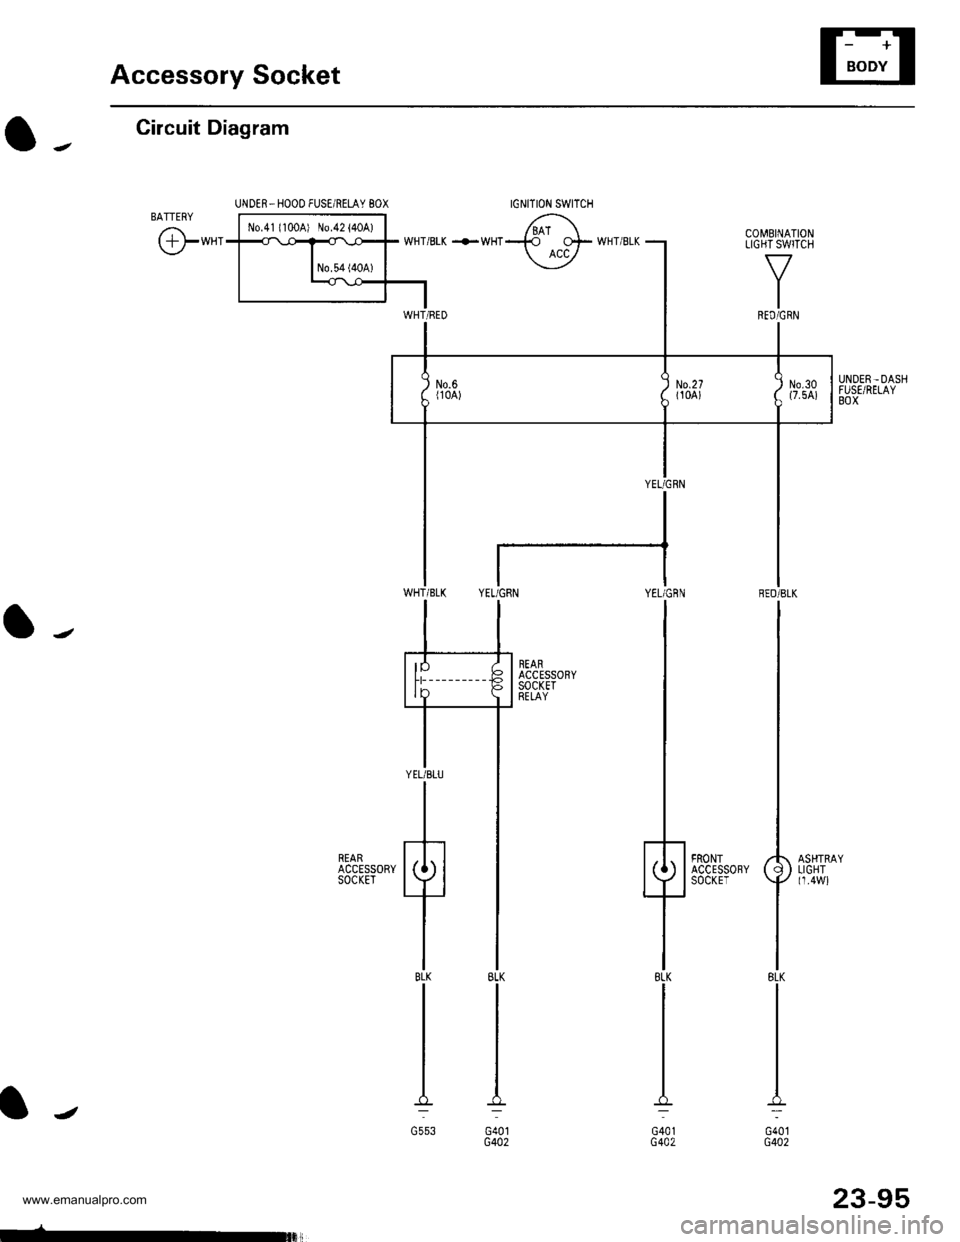 HONDA CR-V 1999 RD1-RD3 / 1.G User Guide 
Accessory Socket
IGNITION SWITCH
Circuit Diagram
UNDER_HOOO FUSE/RELAY 8OX
o-.
l-
lJ
txt 
Fffi^-.rr-.rrl 6\
t-**1*fffiT wHTBrK +*HT-137F wHr BLK
| -*T]
UNDER-DASHFUSE/RELAYBOX
YEL/GflN RED/BLK
lt
t